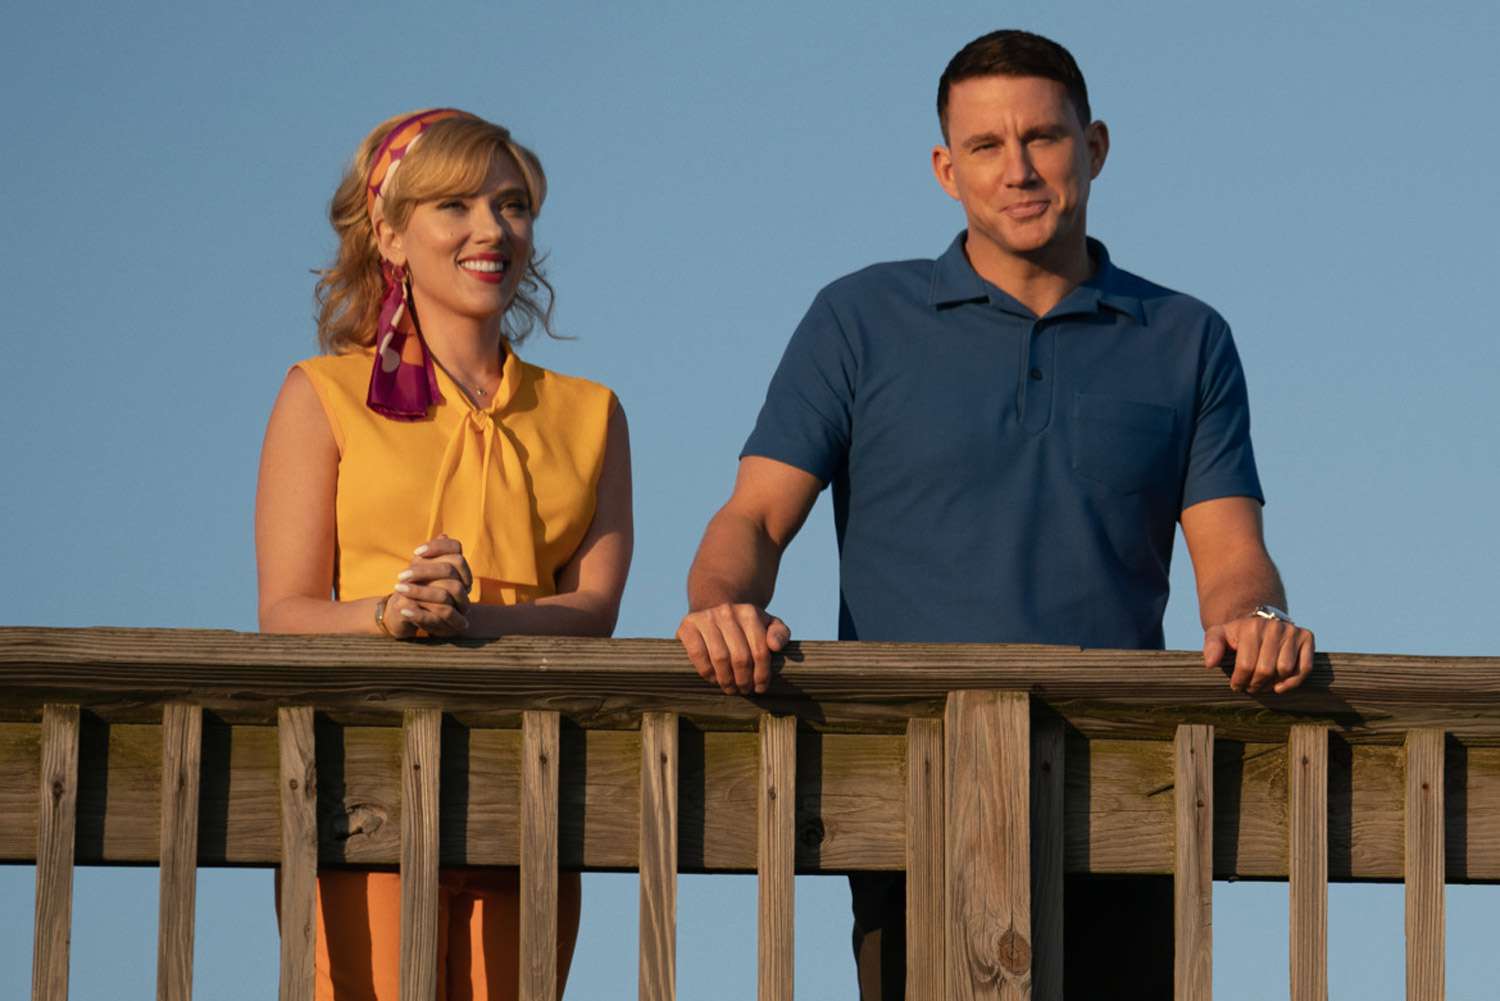 Kelly Jones (Scarlett Johansson) and Cole Davis (Channing Tatum) in FLY ME TO THE MOON.